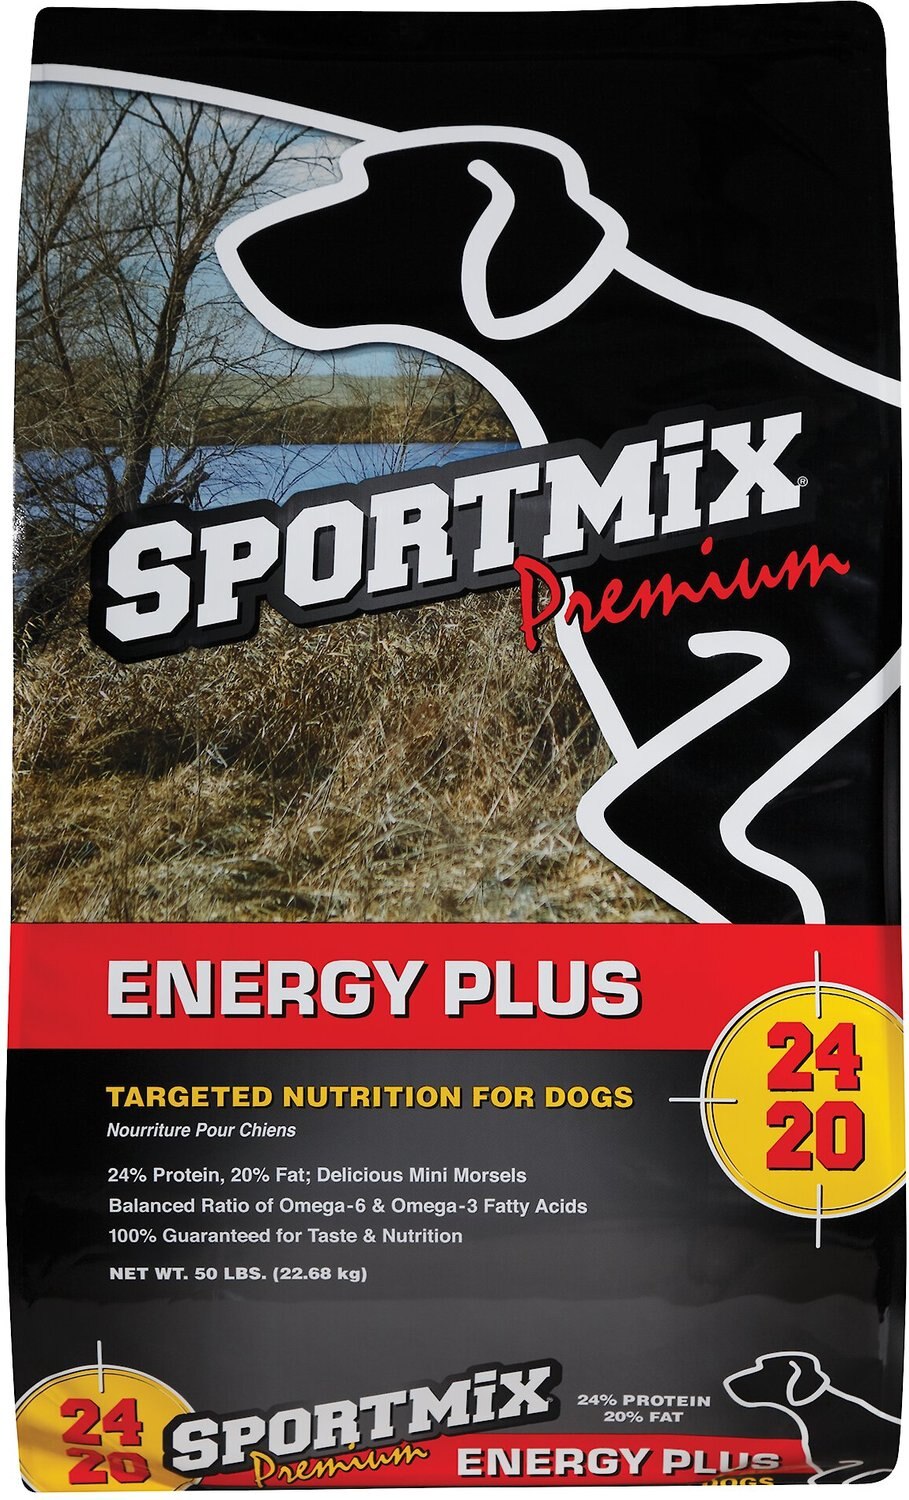 Is Sportmix Good Dog Food?